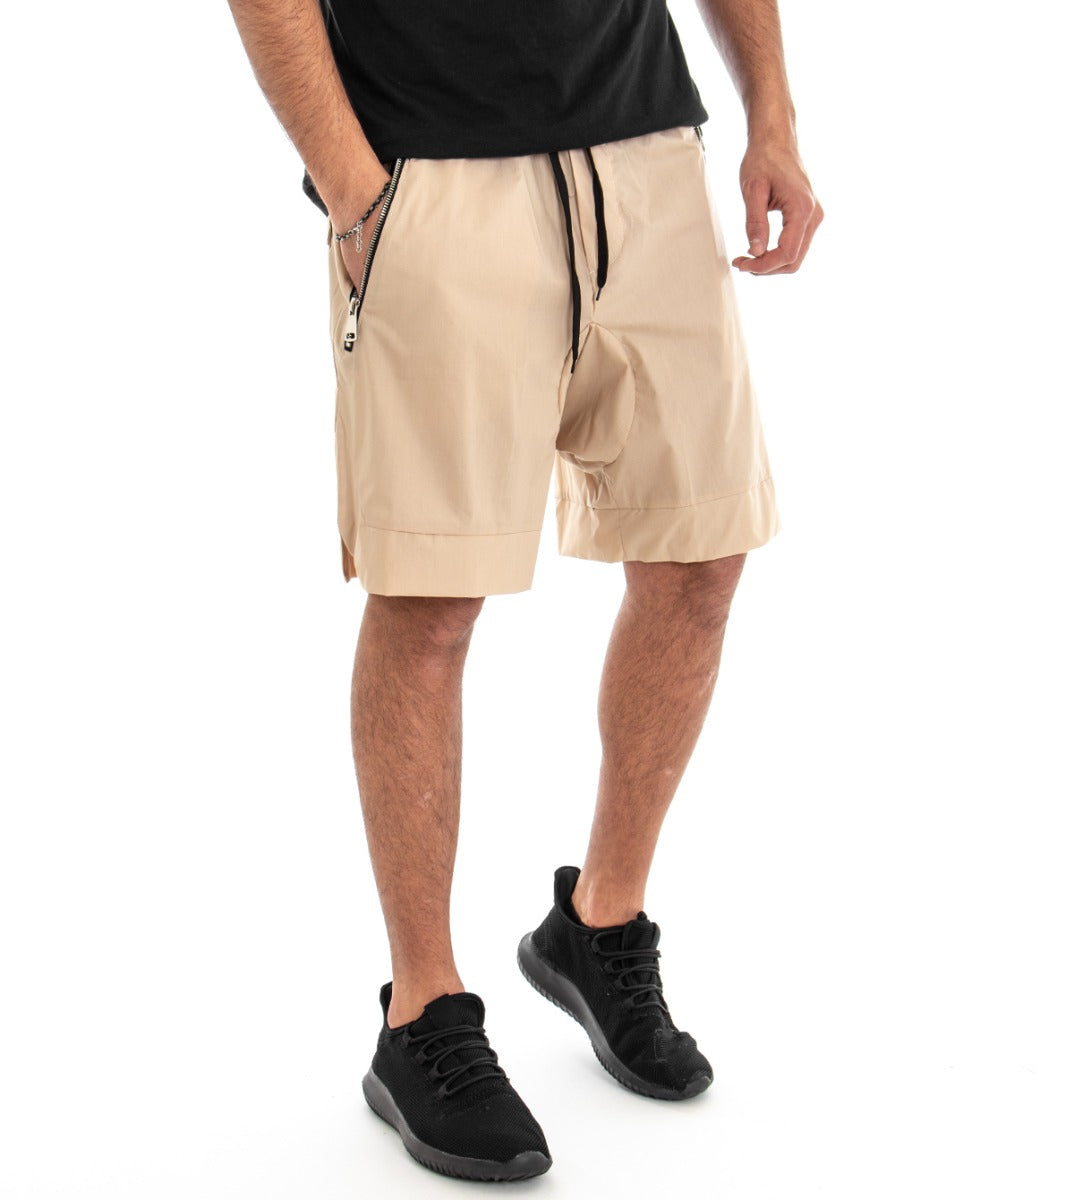 Bermuda Men's Shorts Beige Elastic Low Crotch GIOSAL-PC1360A